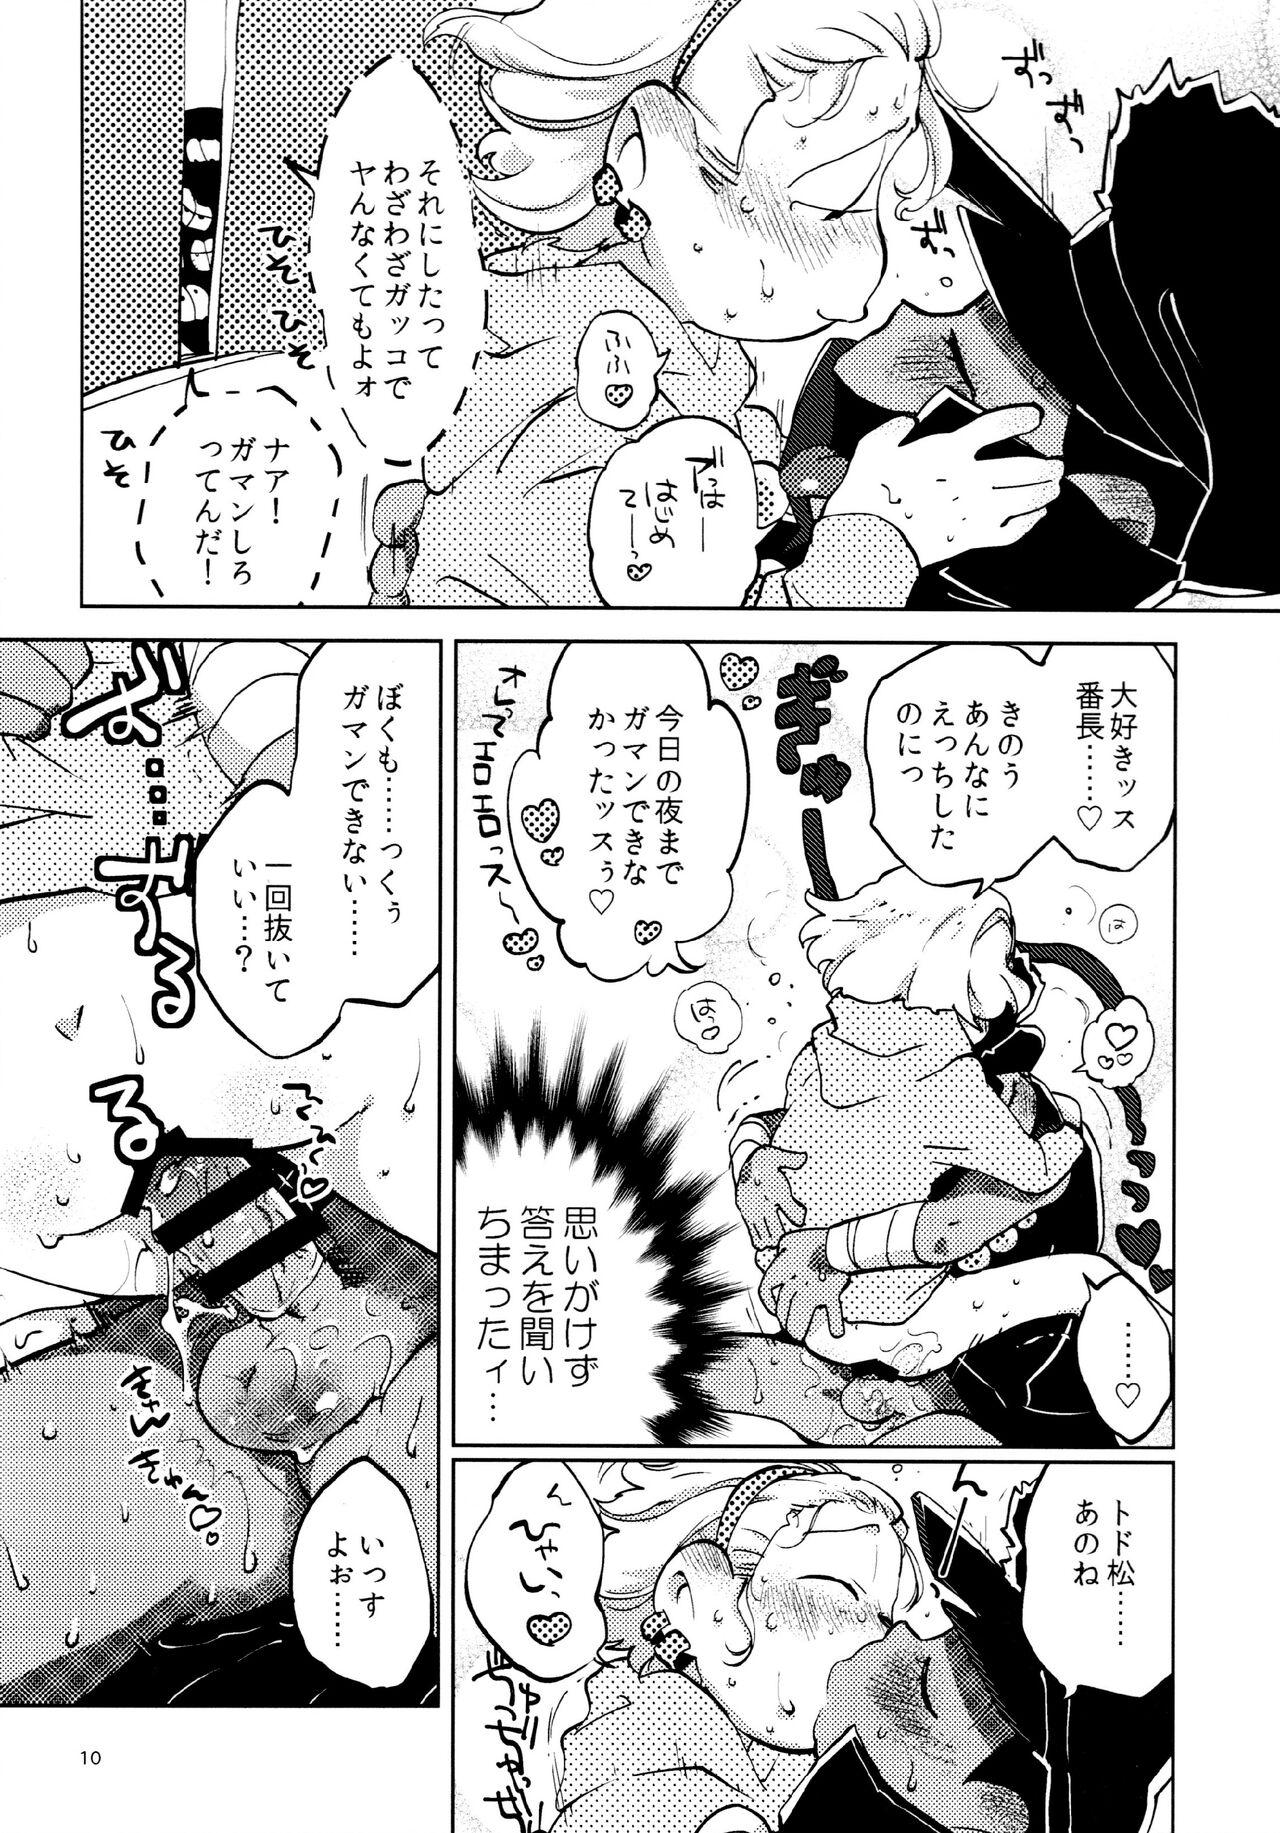 Gay Medical Amaebitamago (gyuunyuu) gaman joutou airabuyuu (Osomatsu-san) - Osomatsu san Parody - Page 10